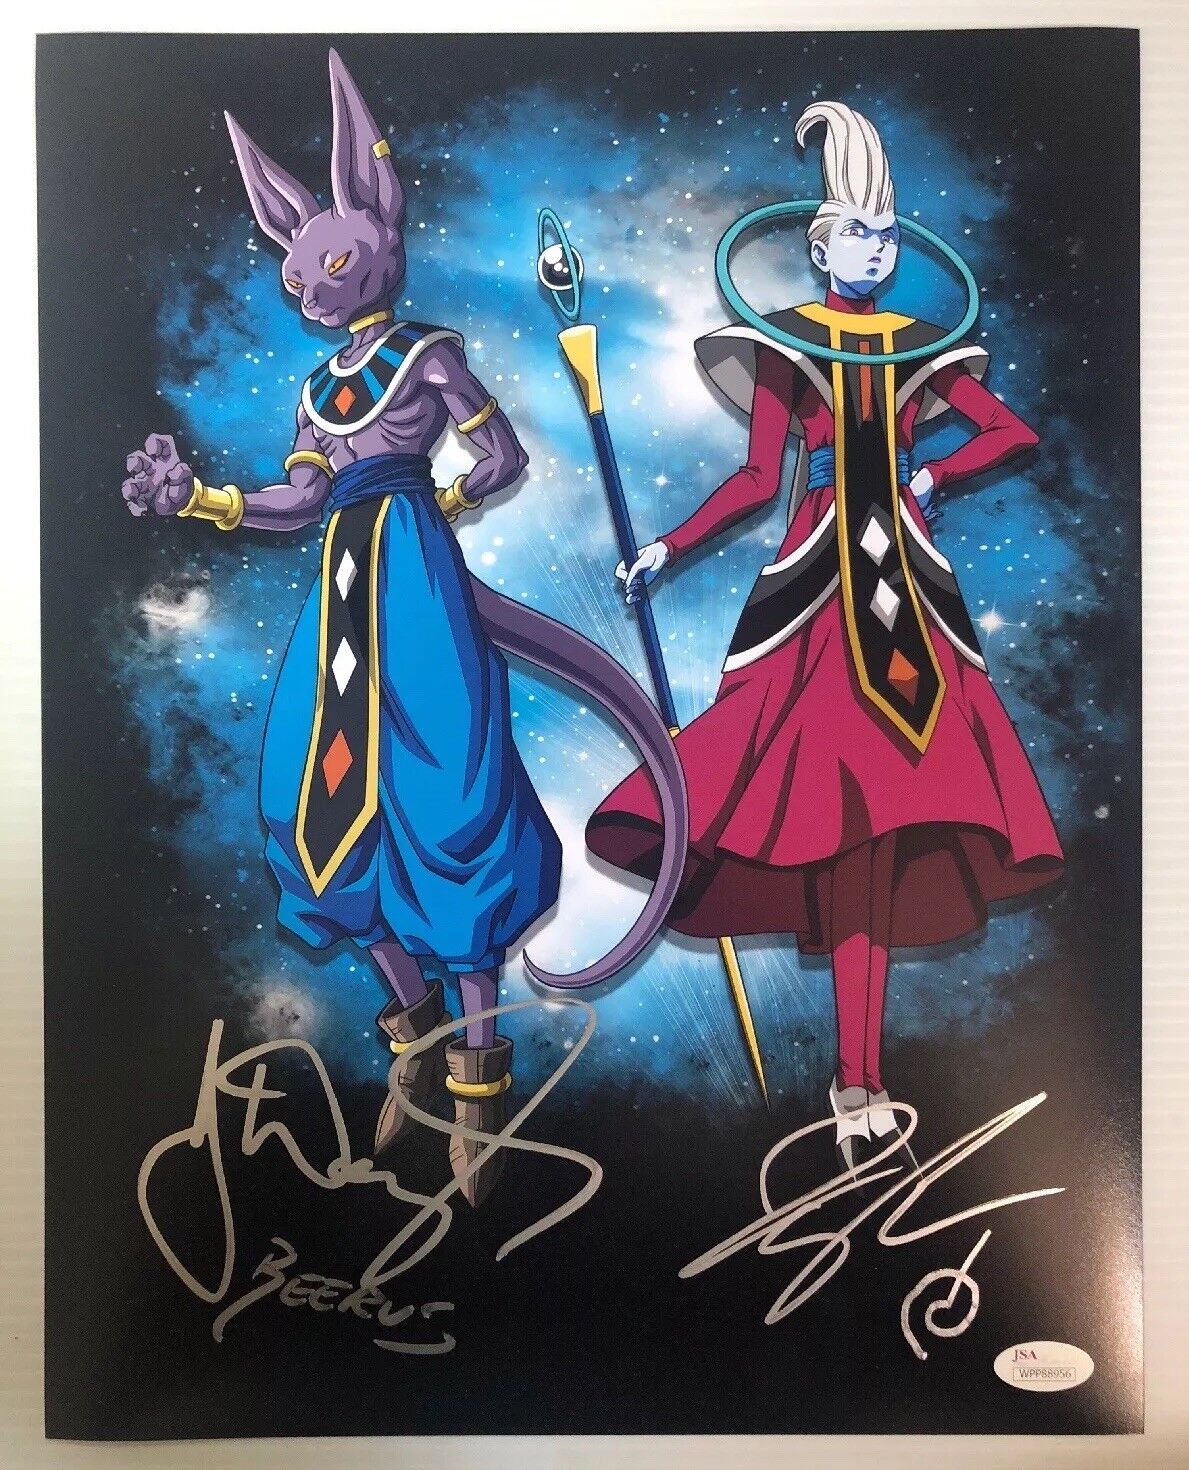 Jason Douglas Ian Sinclair Signed Autographed 11x14 Photo Poster painting Dragon Ball Z JSA COA